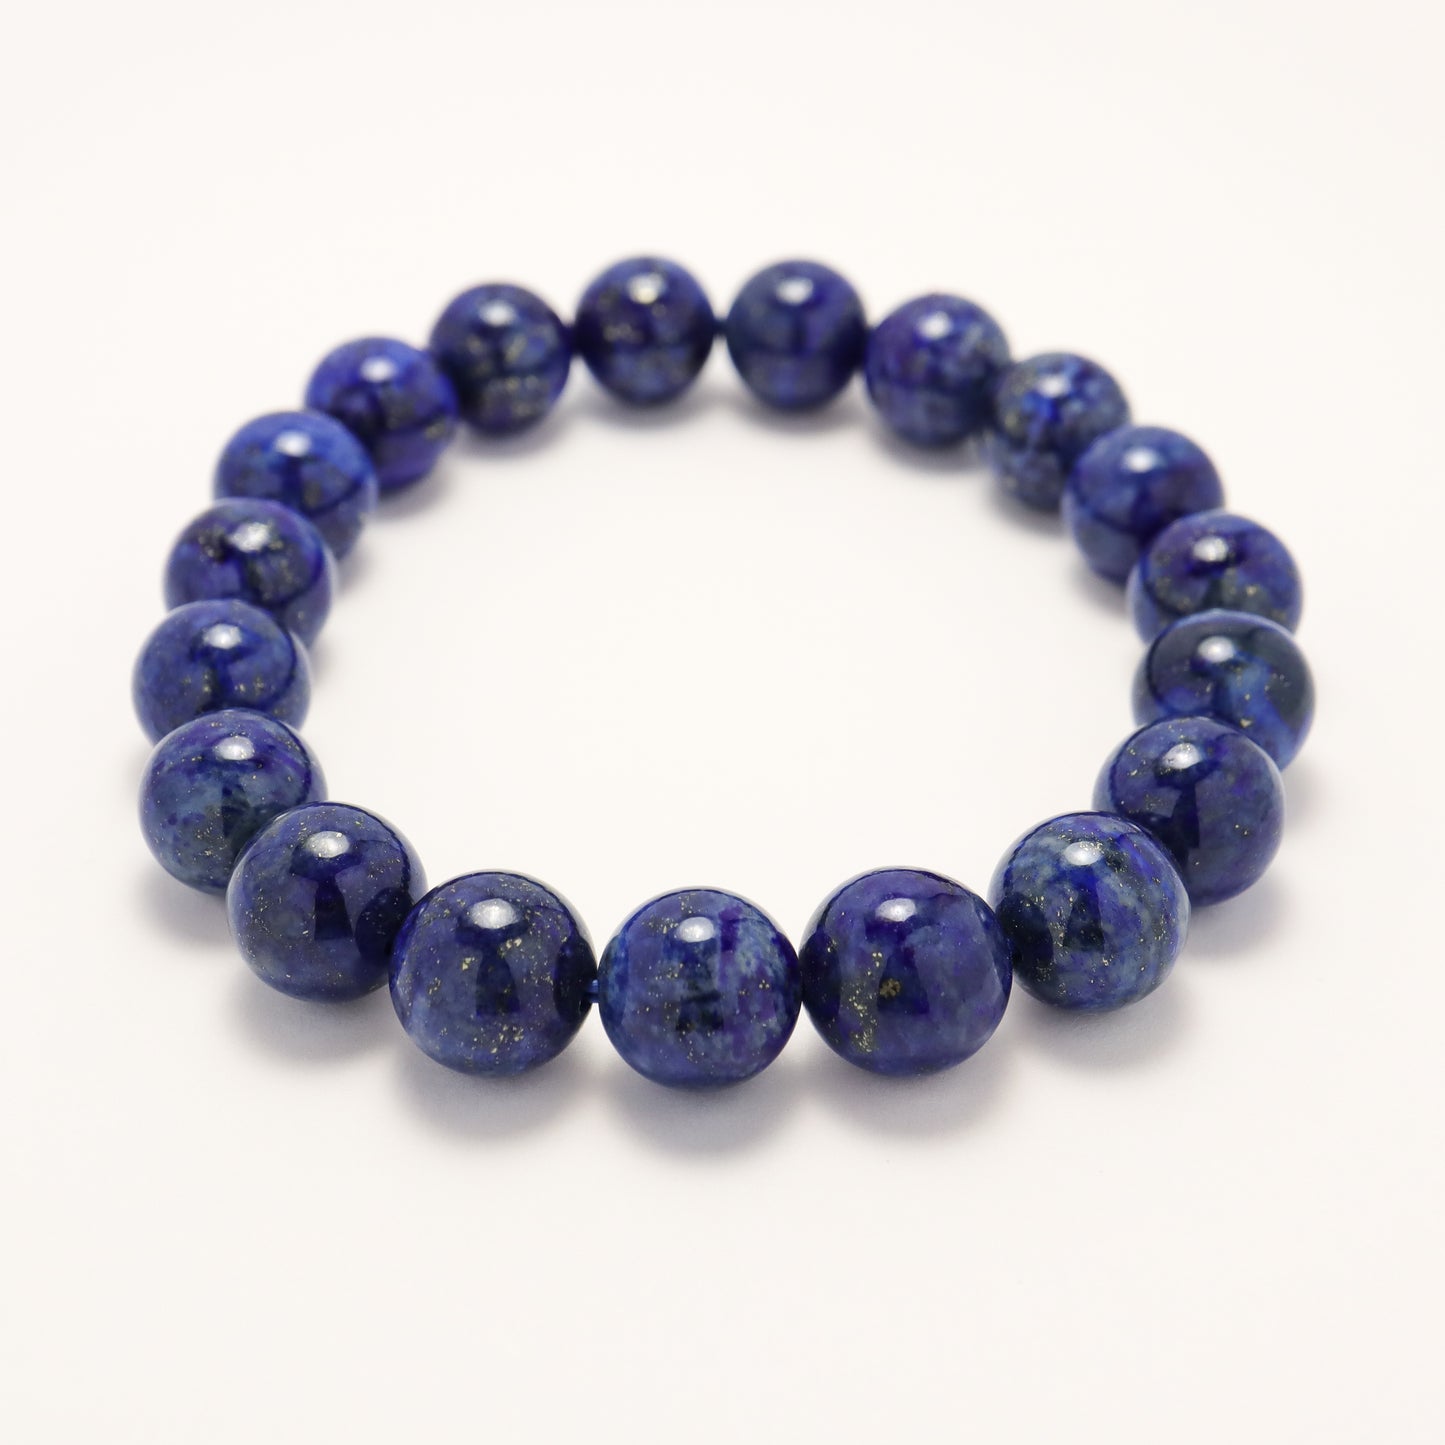 The Sixth Sense - Lapis Lazuli Bracelet